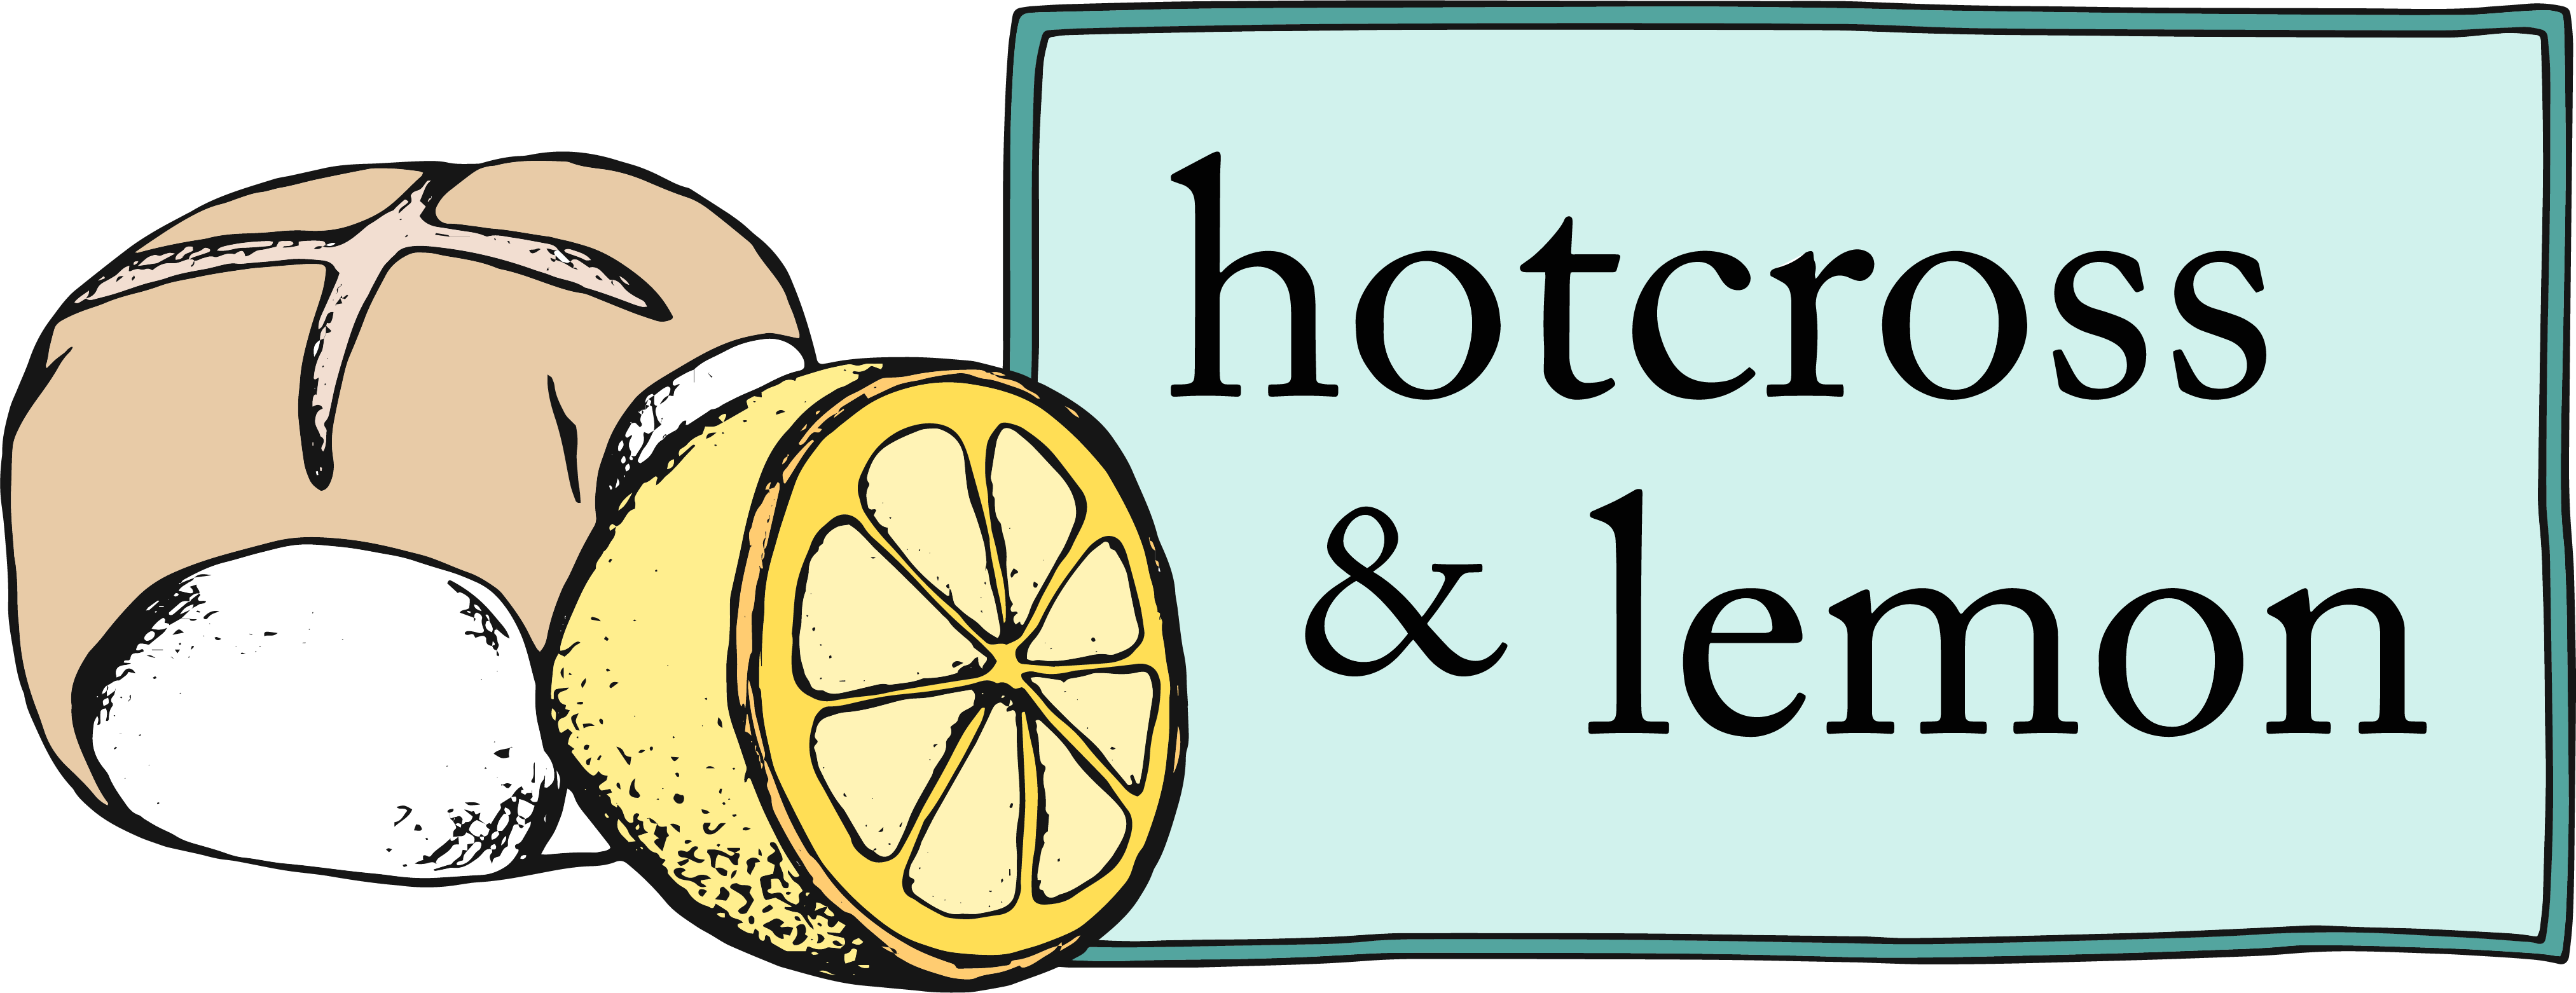 hotcross & lemon